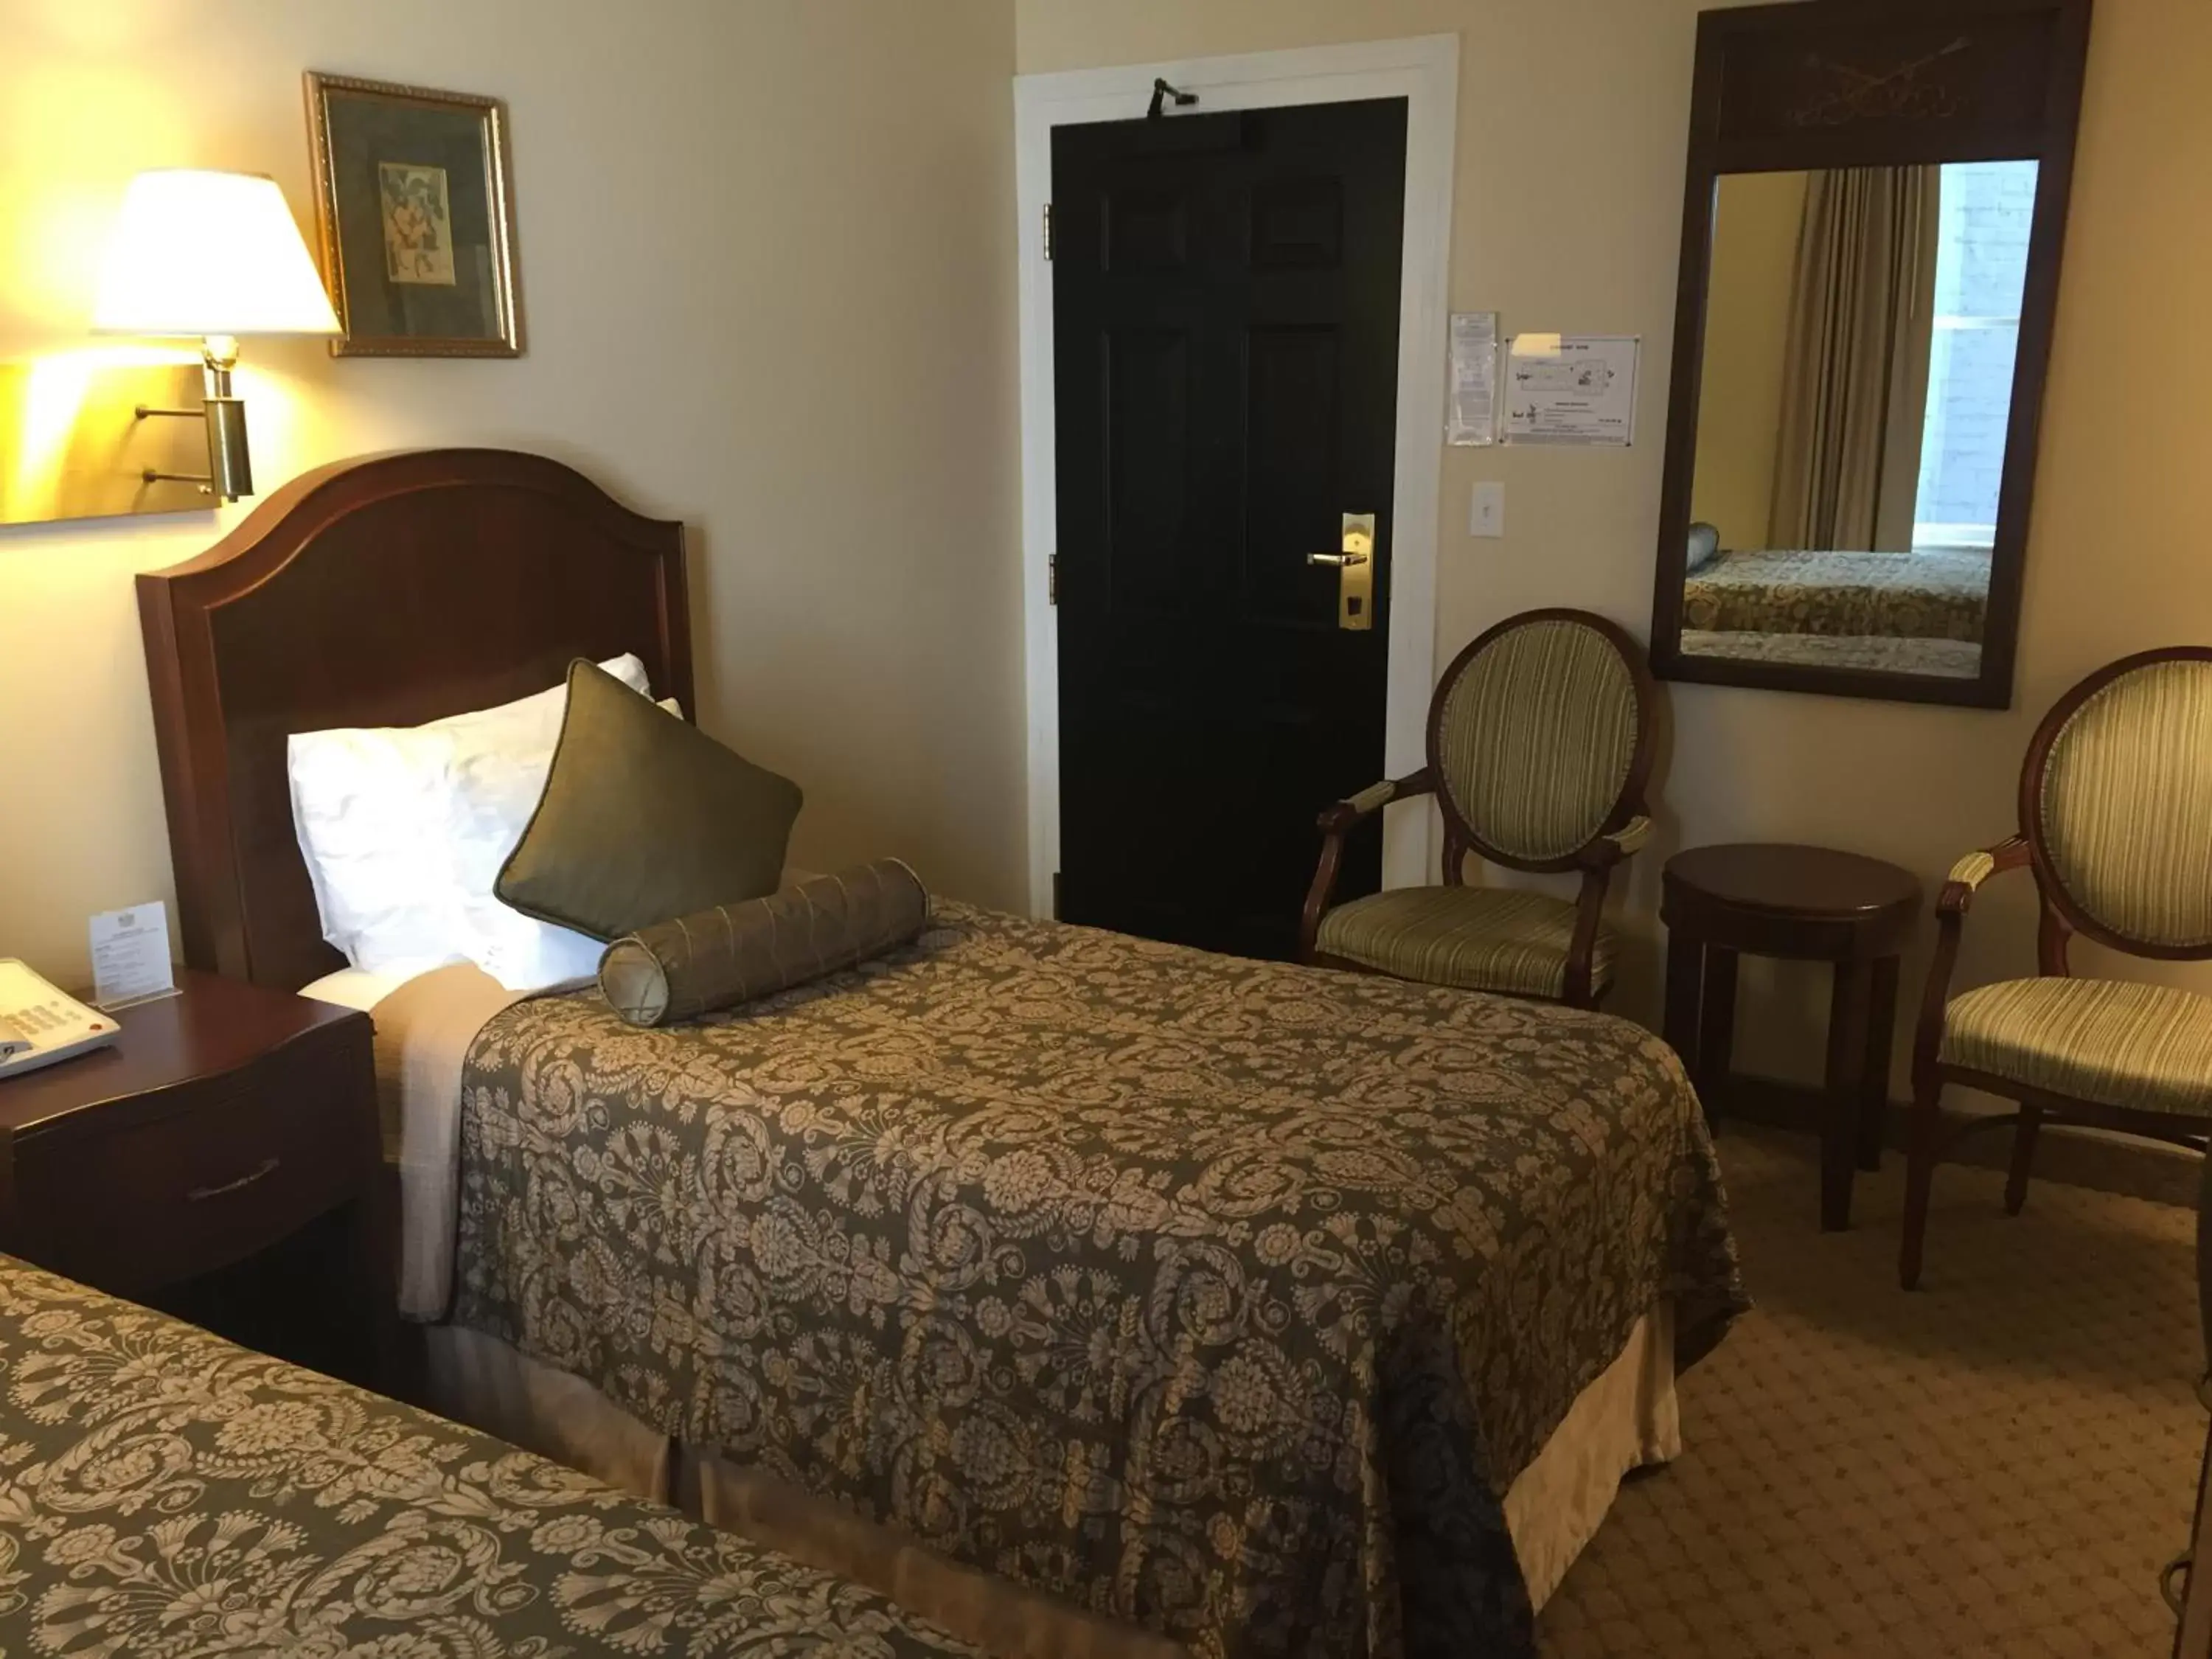 Bed, Room Photo in Hotel Amari